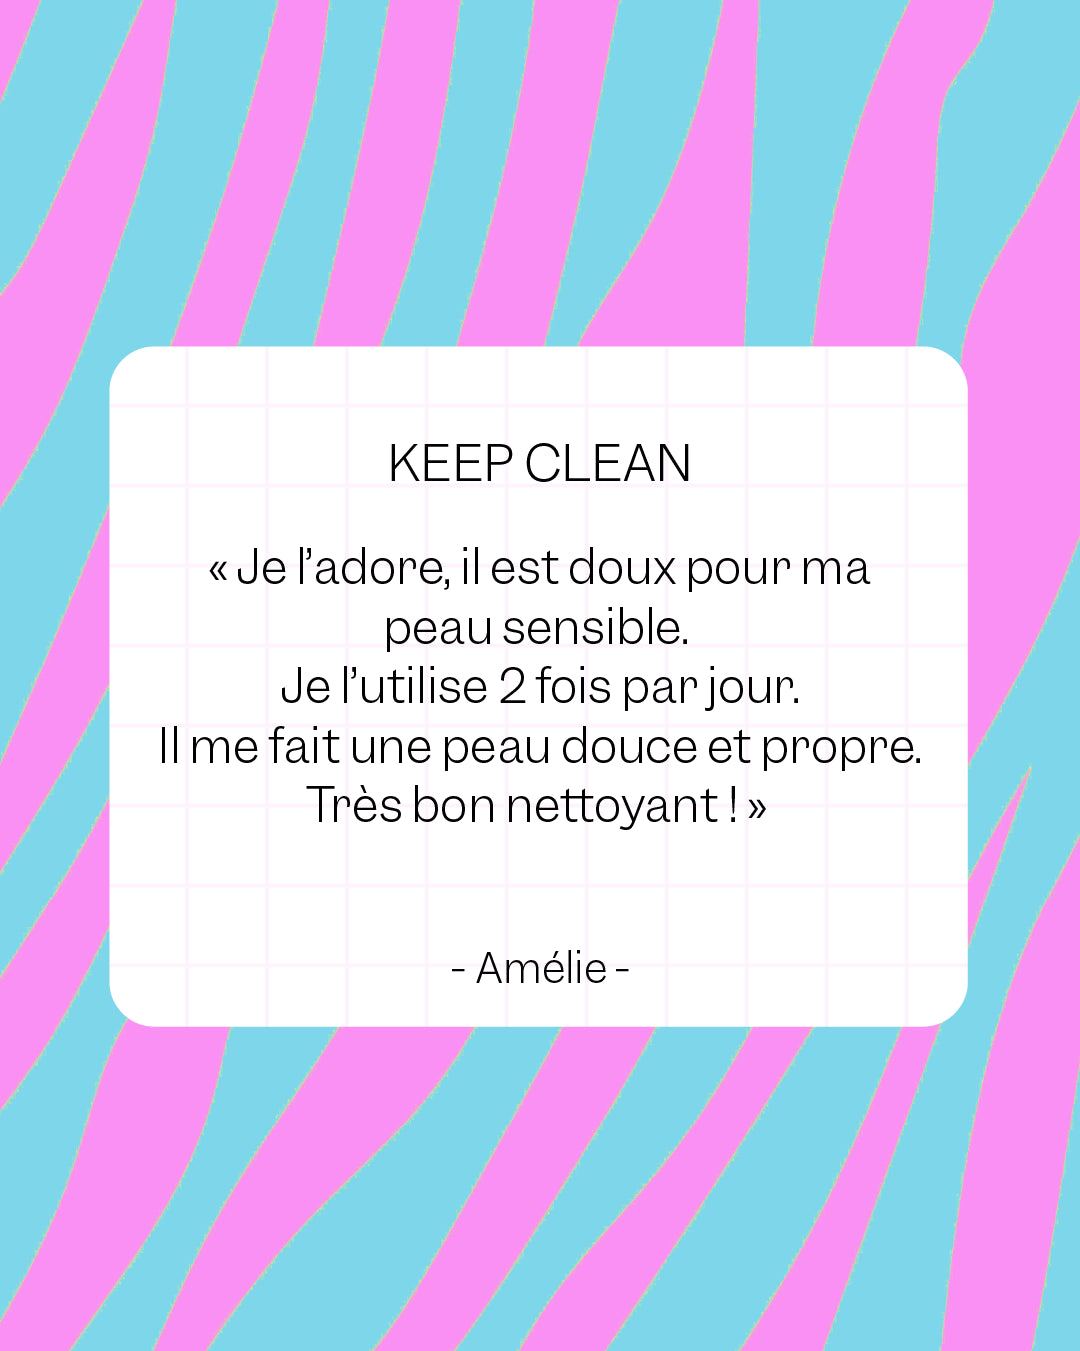 KEEP CLEAN